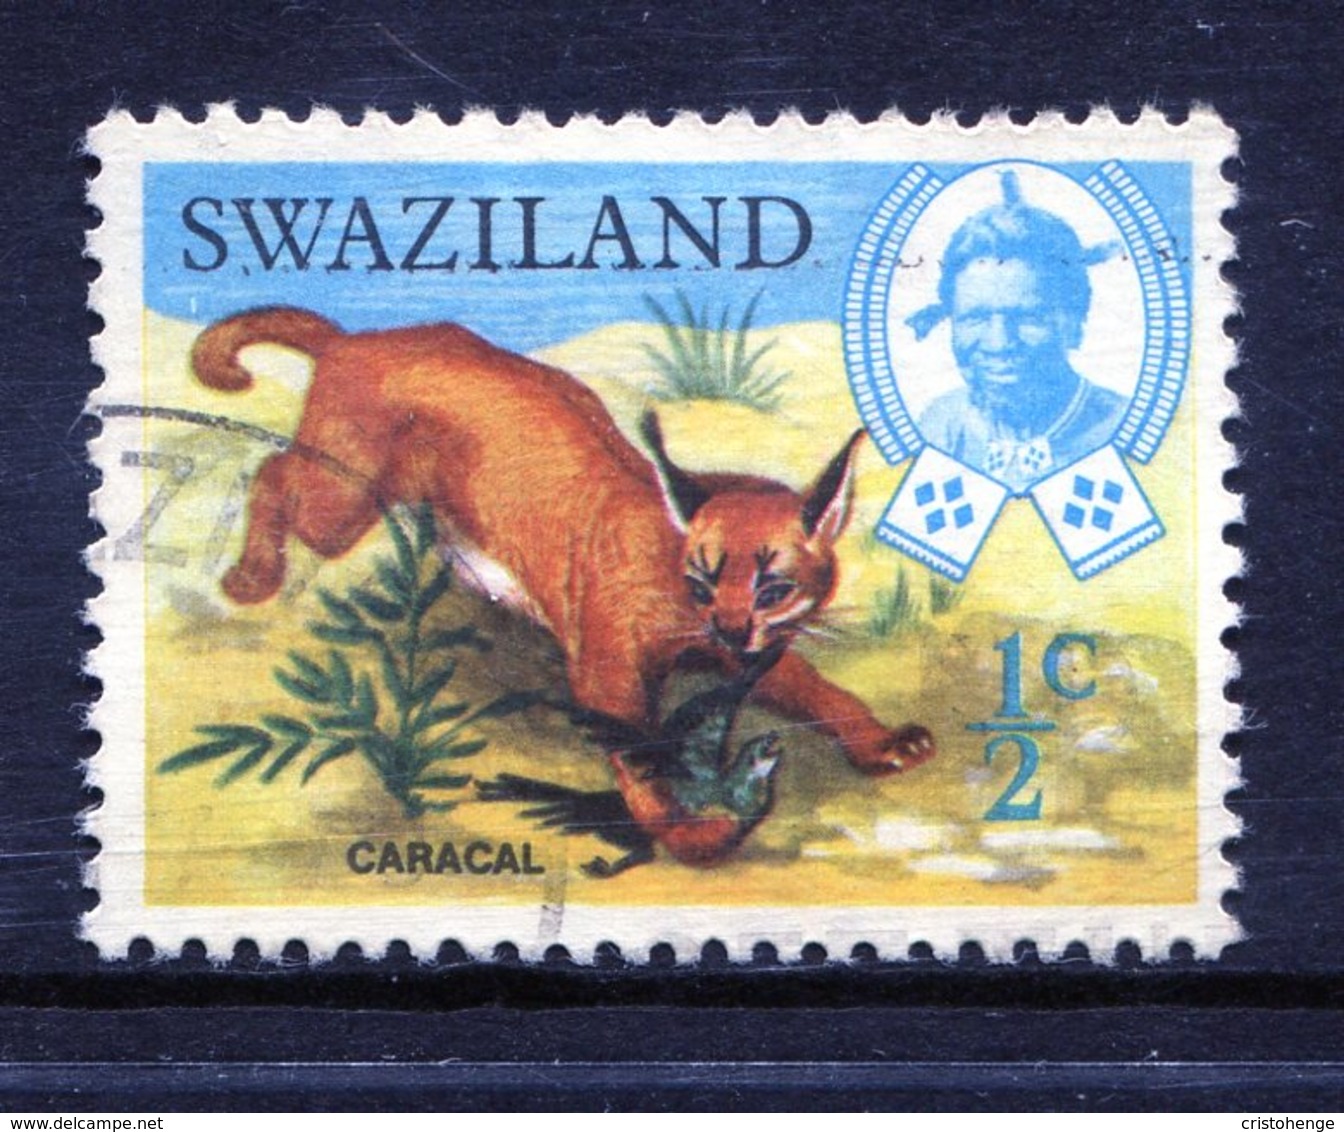 Swaziland 1969 Wildlife - ½c Caracal Used (SG 161) - Swaziland (1968-...)